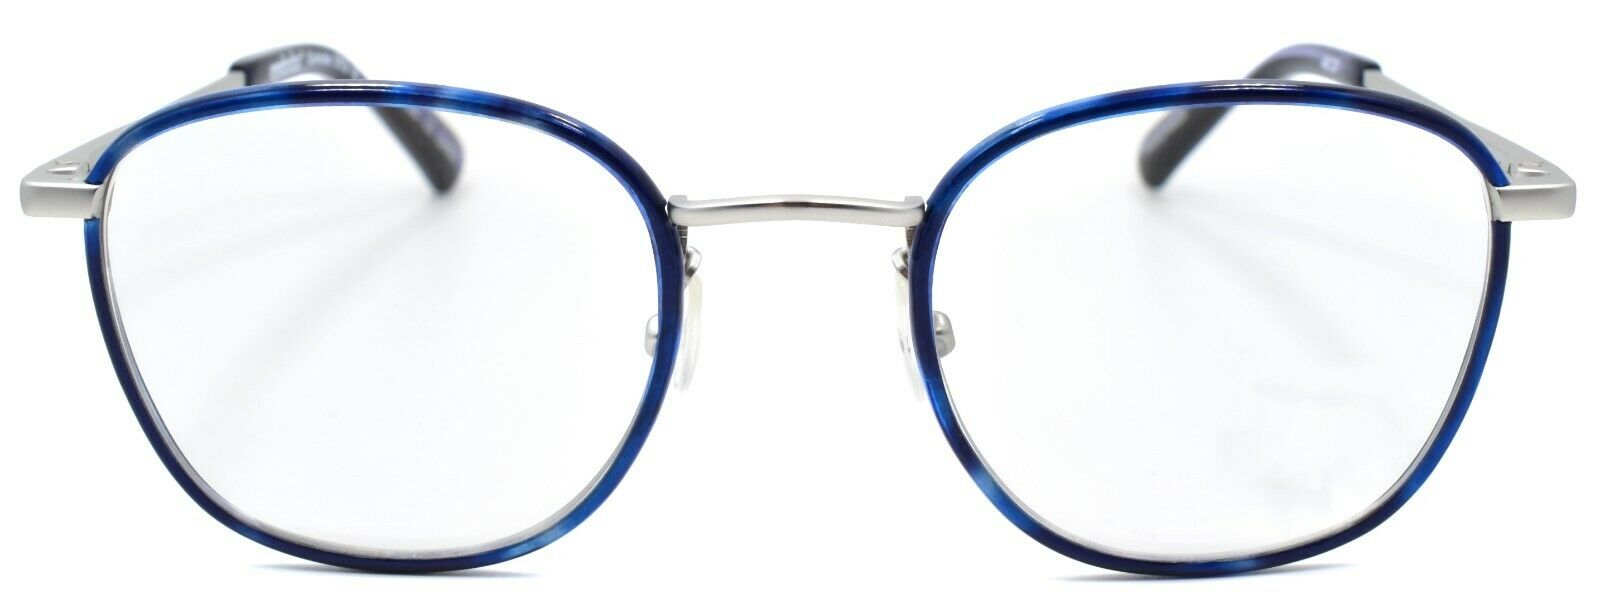 2-Eyebobs Outside 3172 10 Unisex Reading Glasses Blue / Silver +2.00-842754168762-IKSpecs